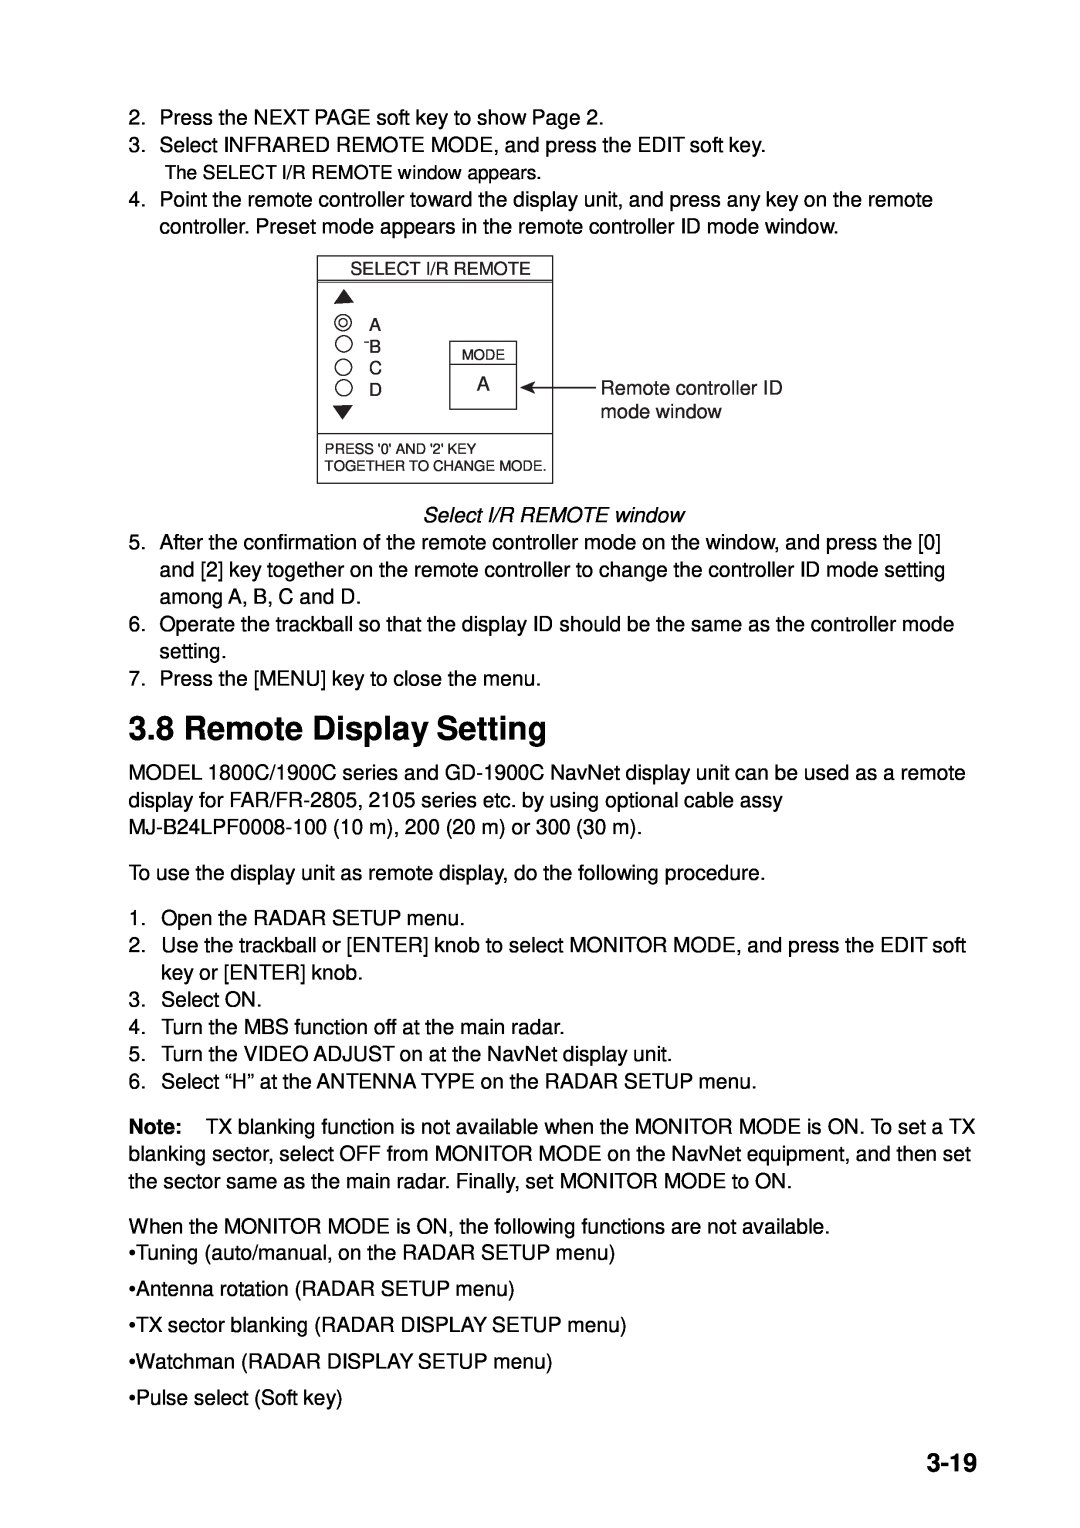 Furuno 1823C, 1933C, 1943C, 1833C, GD-1900C, 1953C manual Remote Display Setting, 3-19 